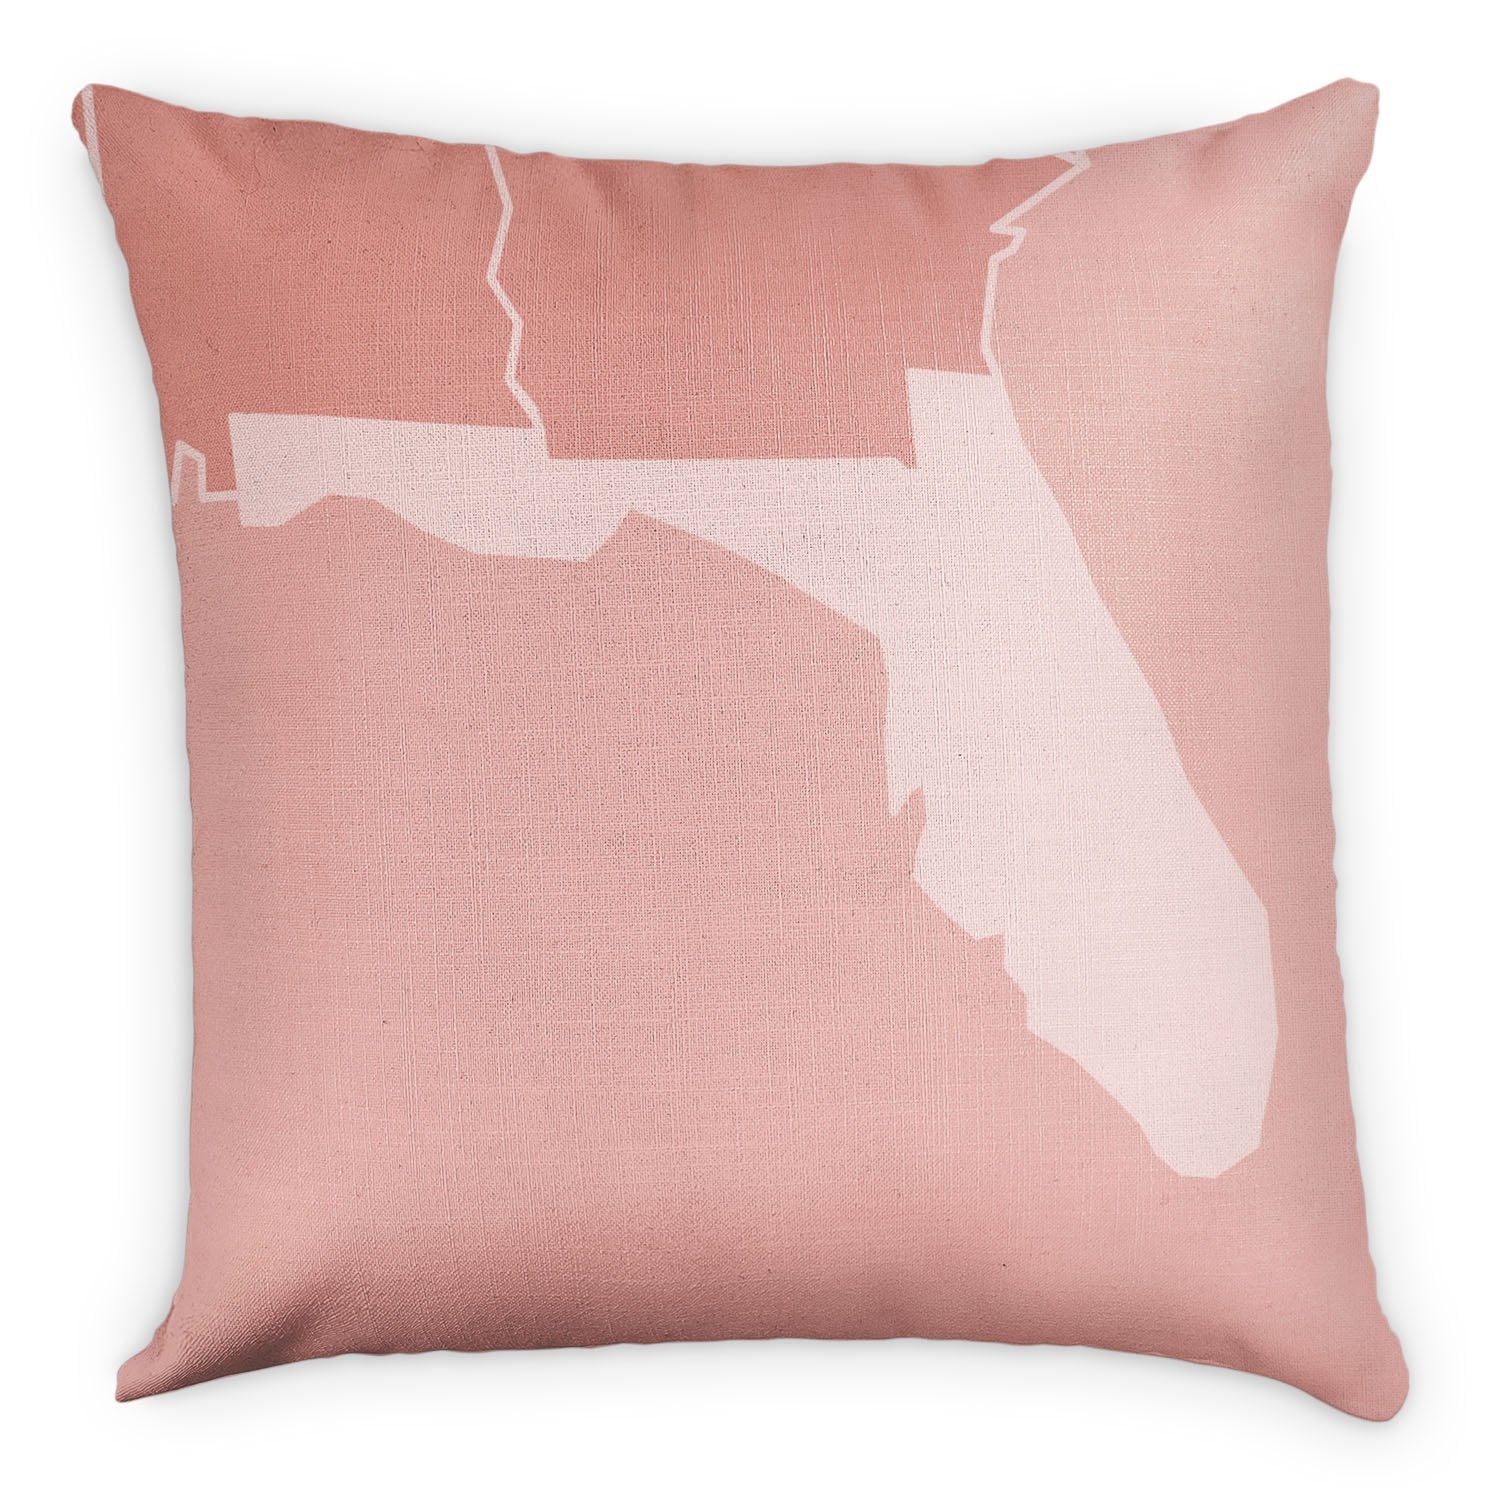 Florida Square Pillow - Linen -  - Knotty Tie Co.